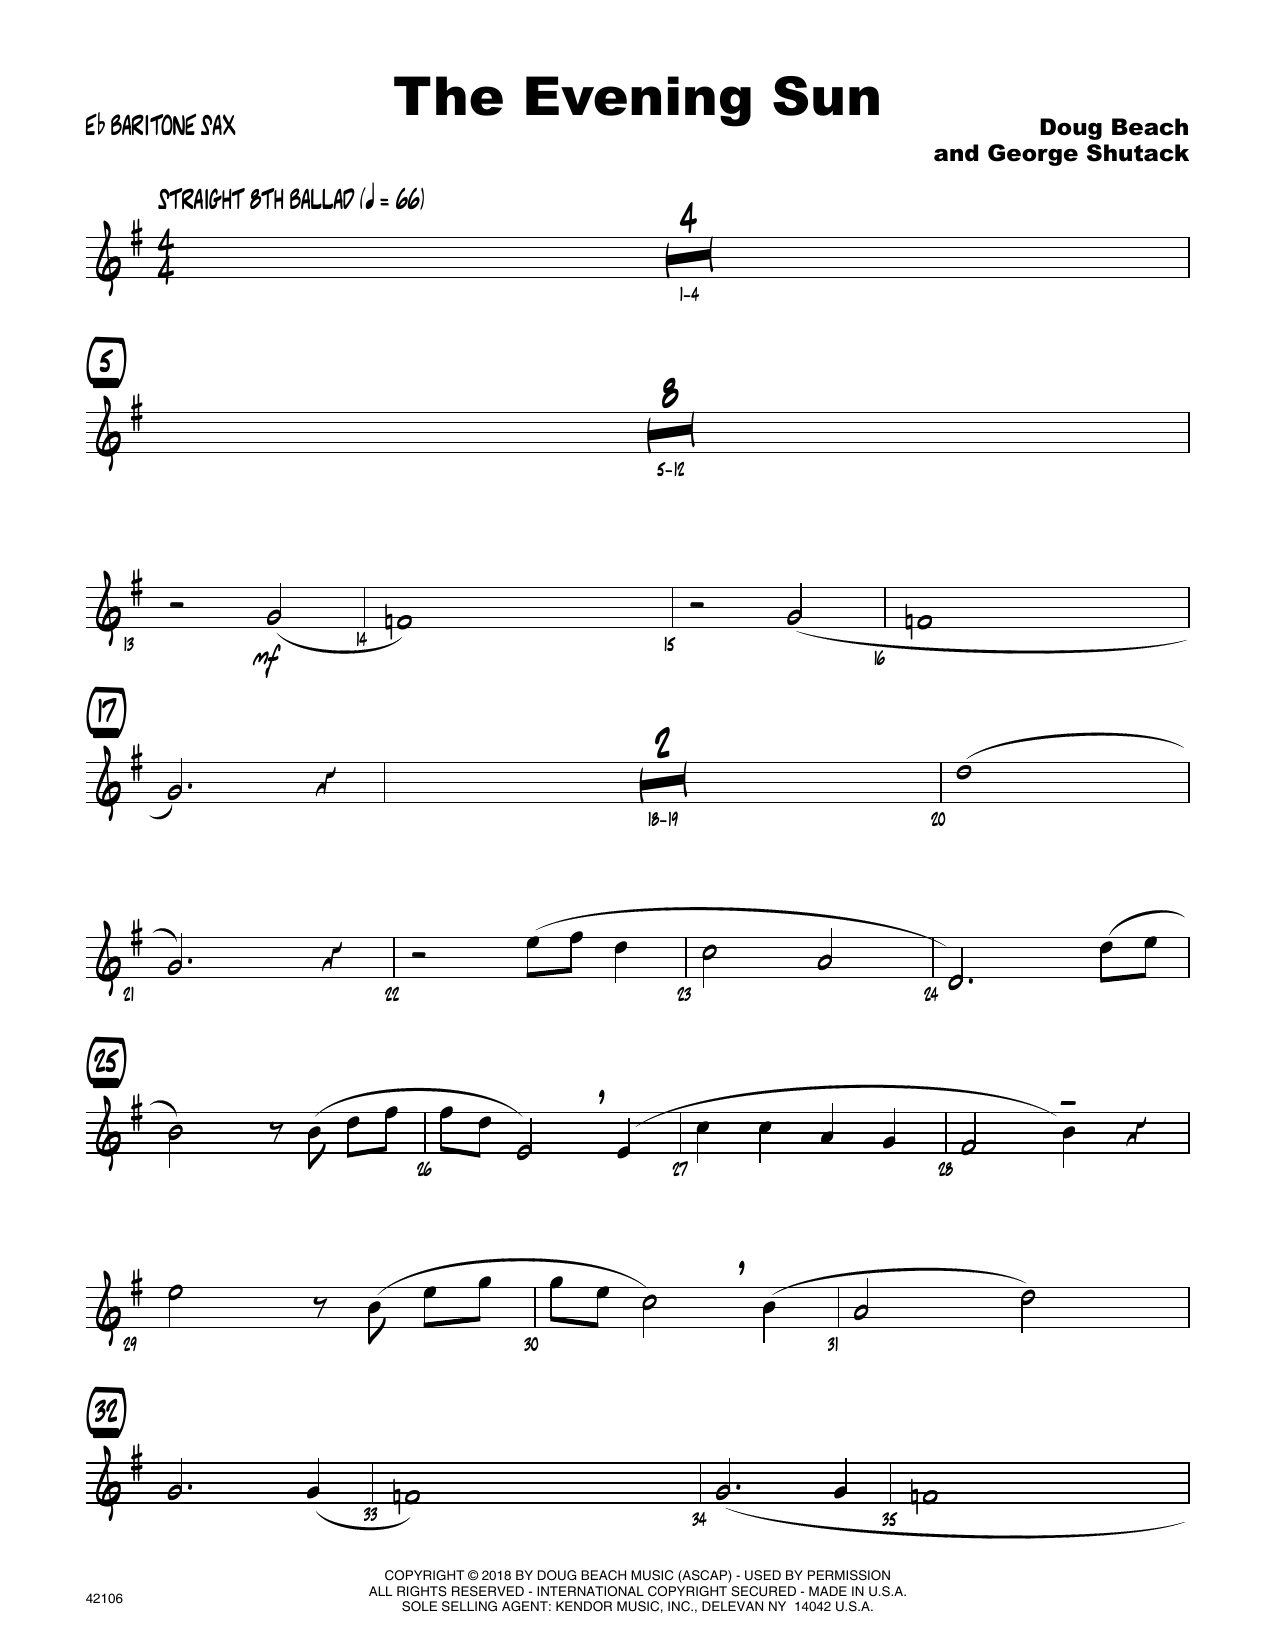 Download Doug Beach & George Shutack The Evening Sun - Eb Baritone Saxophone Sheet Music